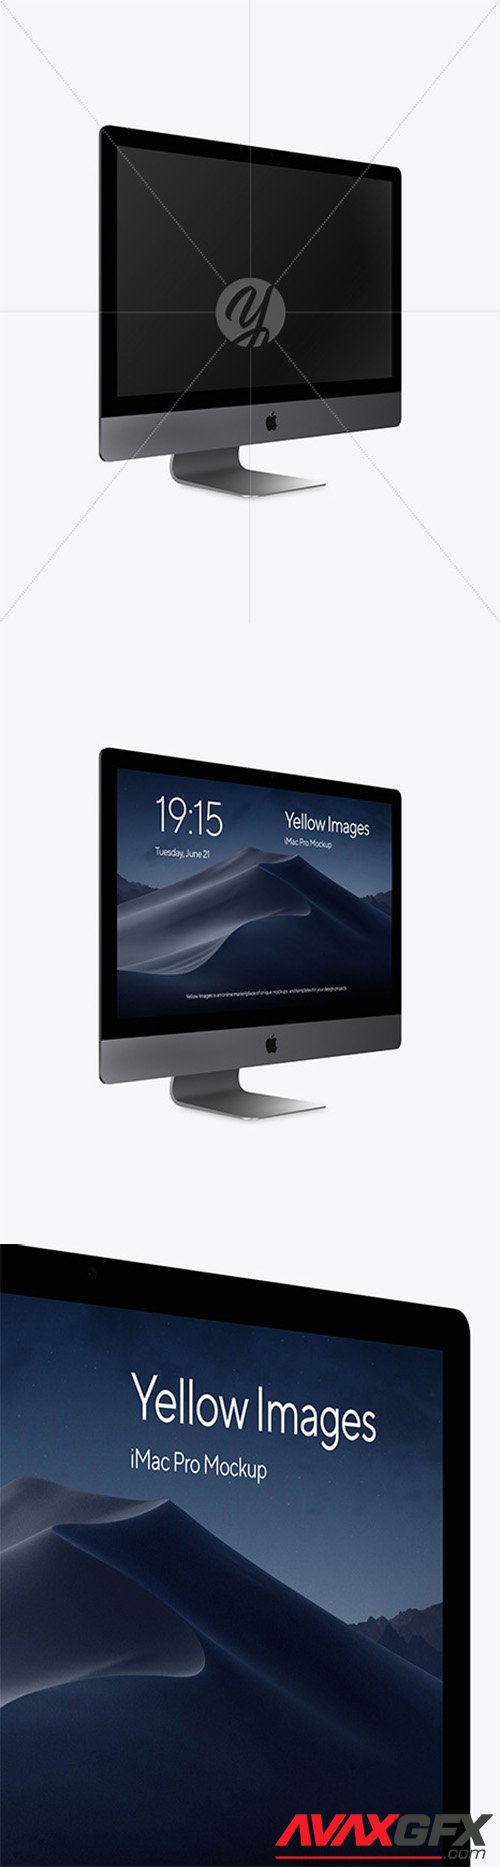 iMac Pro Space Gray Mockup 78987